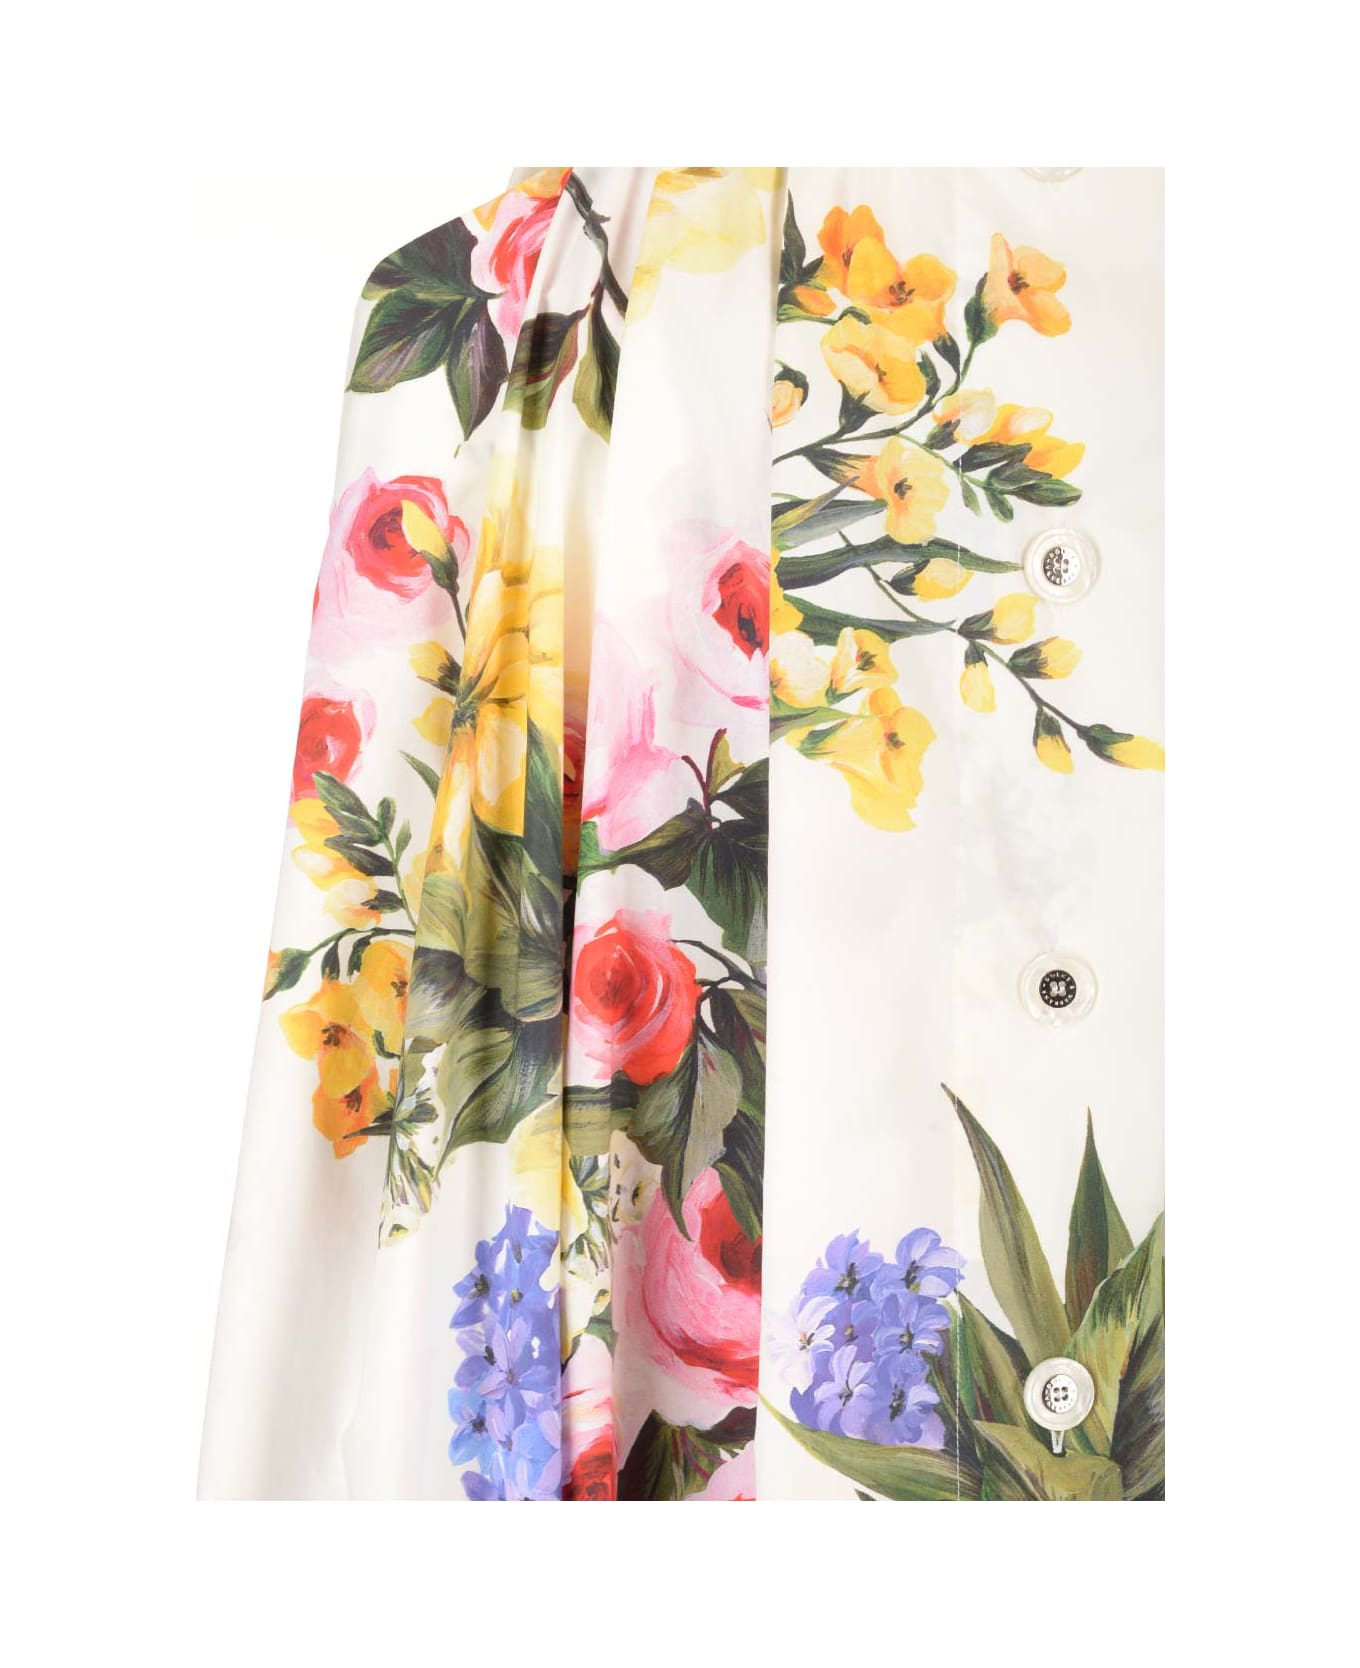 Dolce & Gabbana Floral Print Skirt - Multicolor スカート